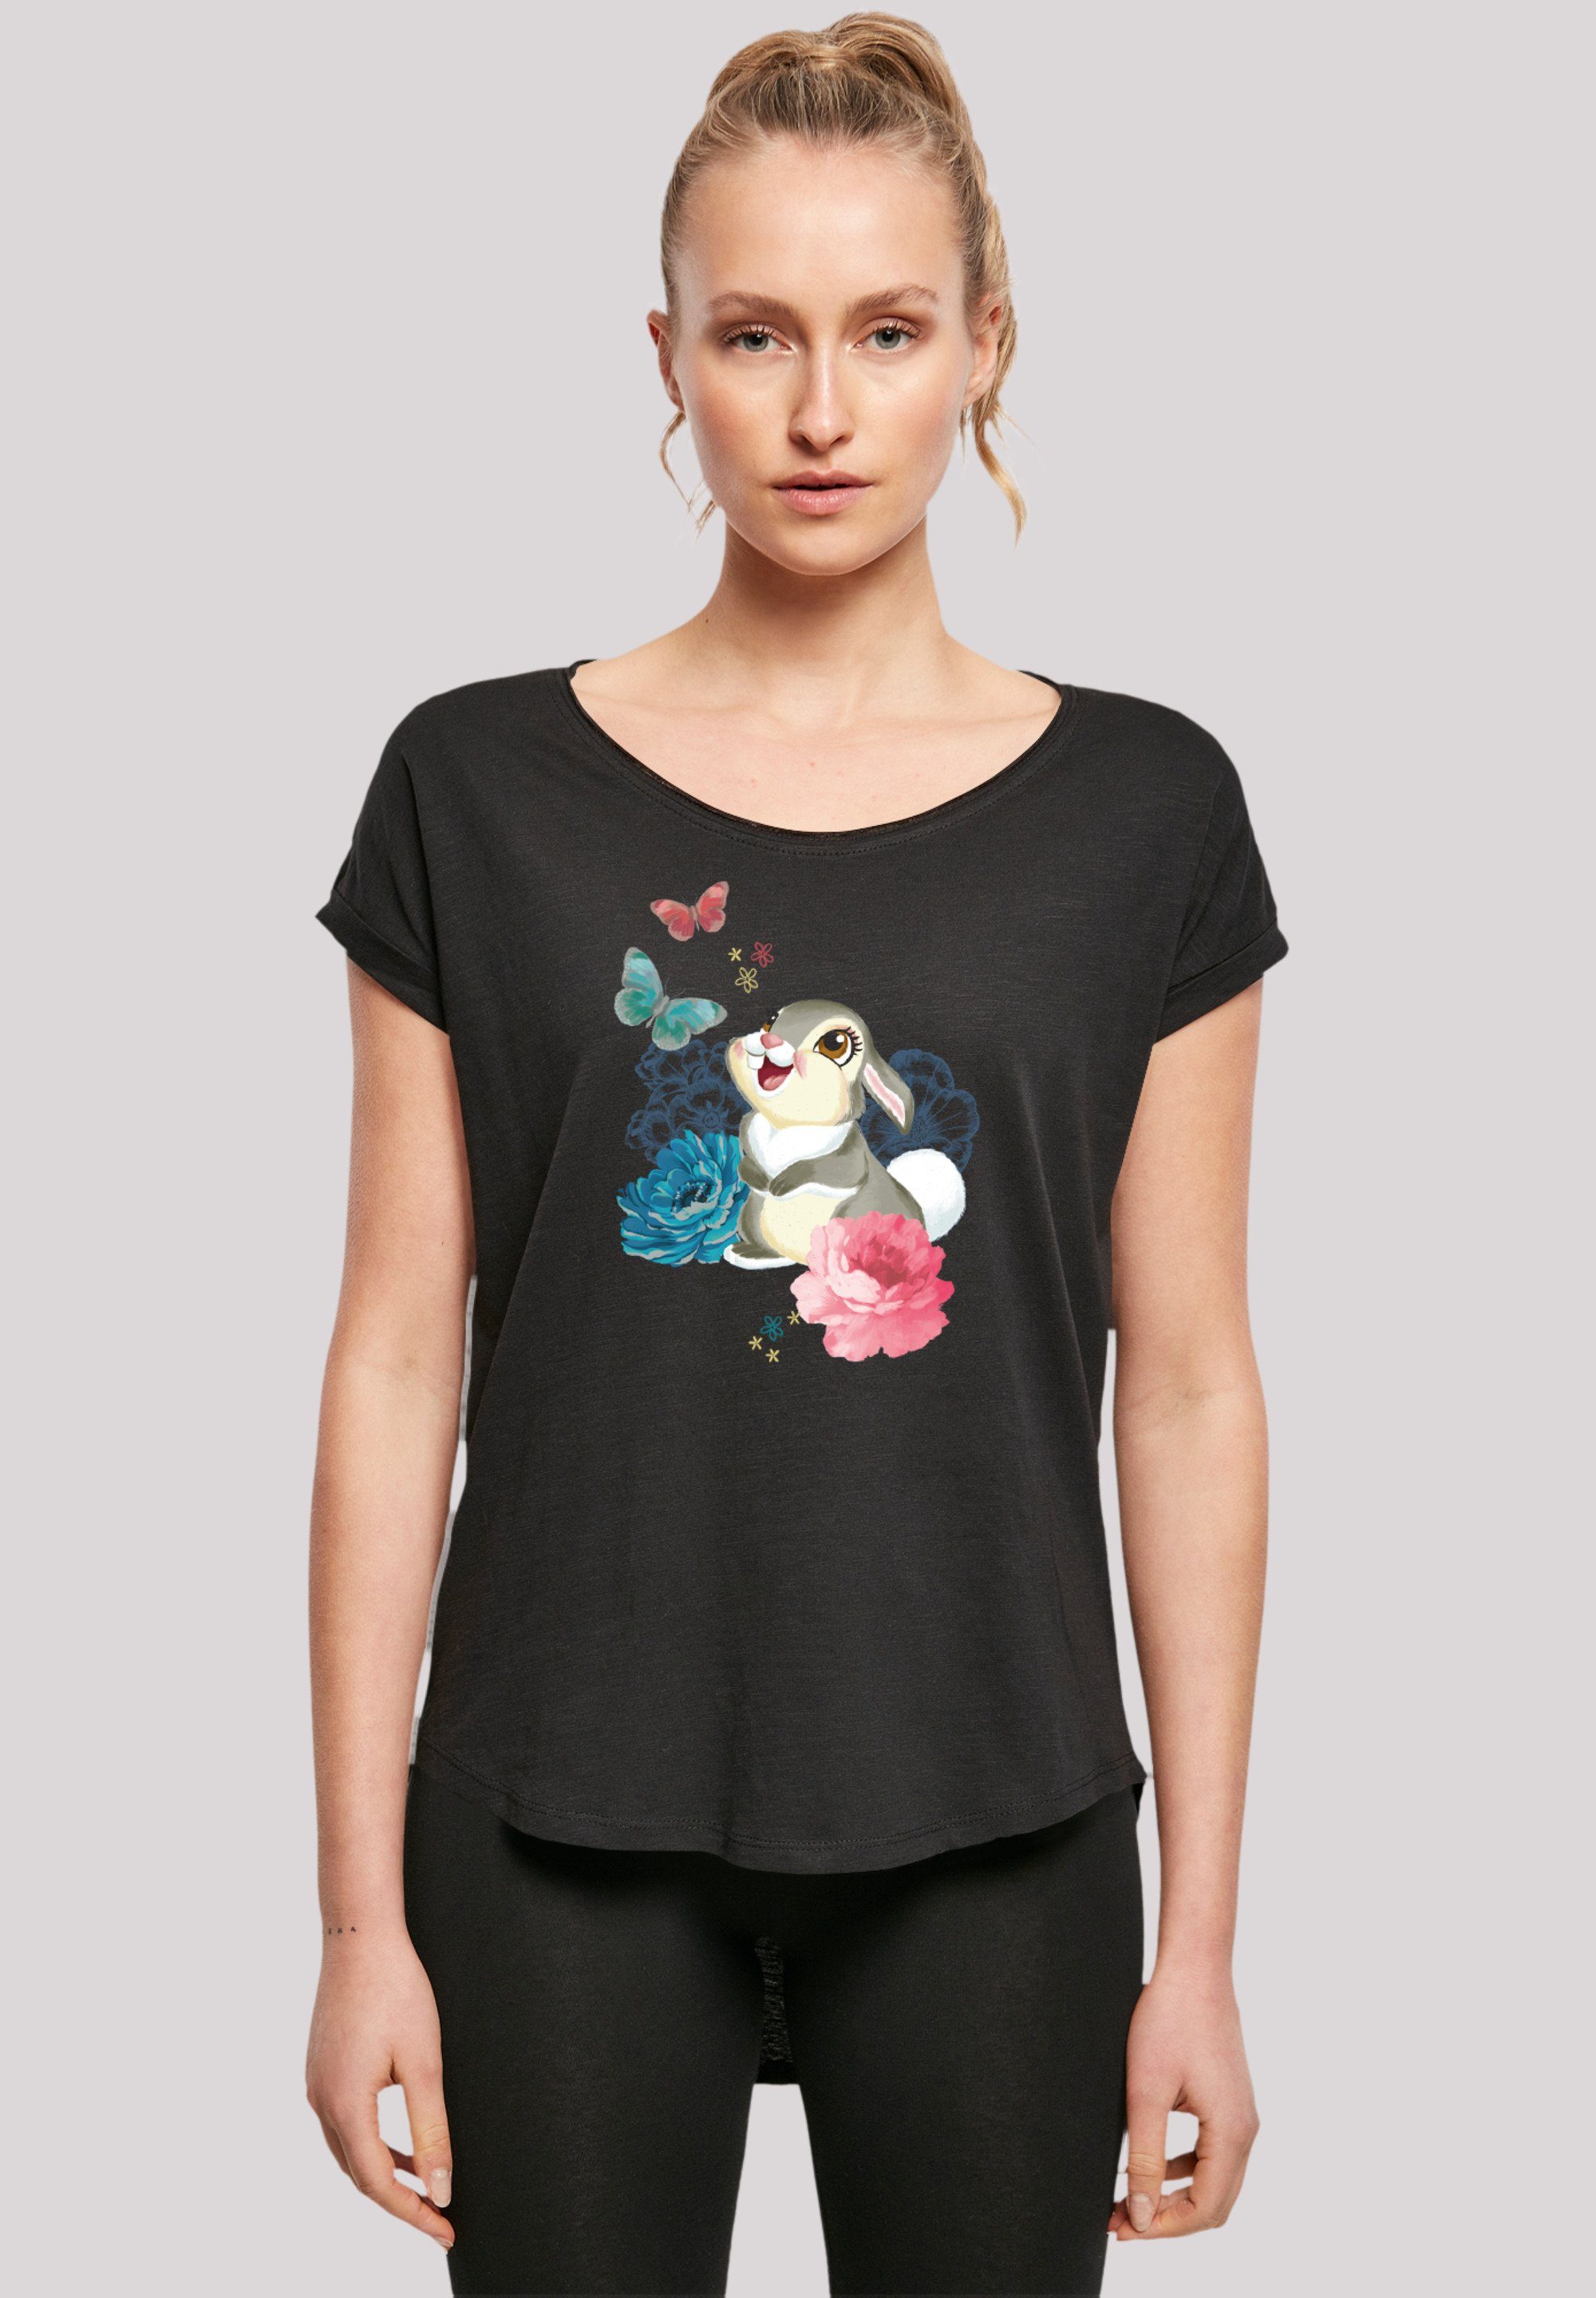 F4NT4STIC T-Shirt Disney Bambi Thumper Premium Qualität